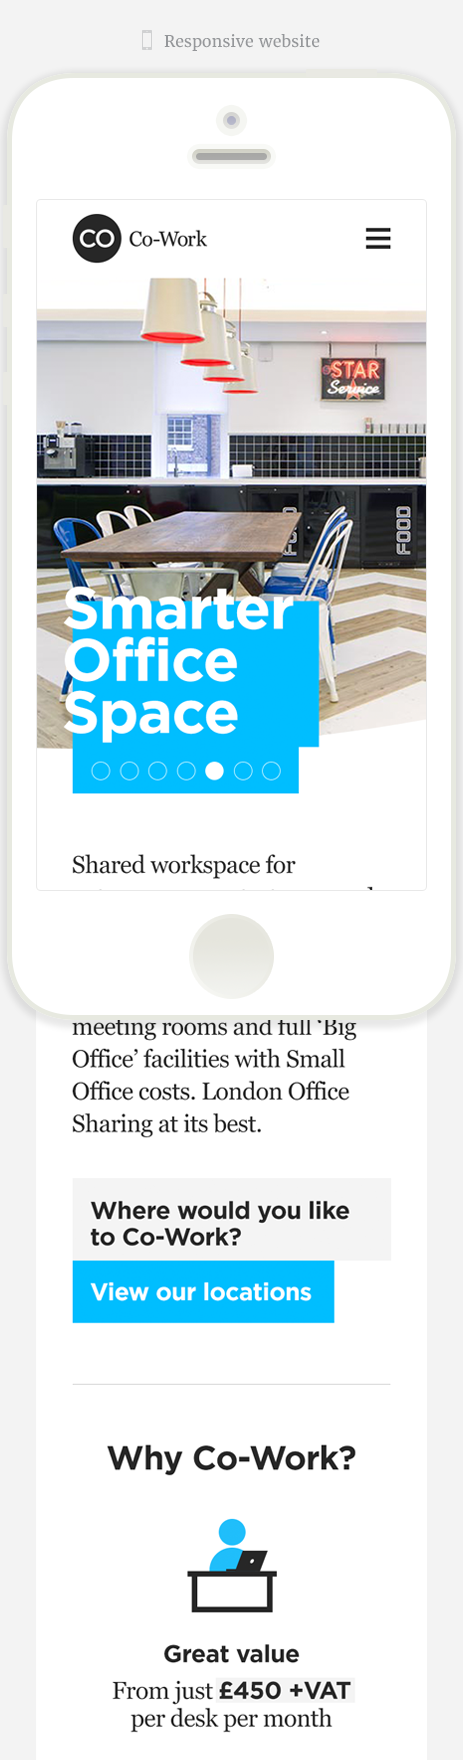 Co-Work: Shared workspace